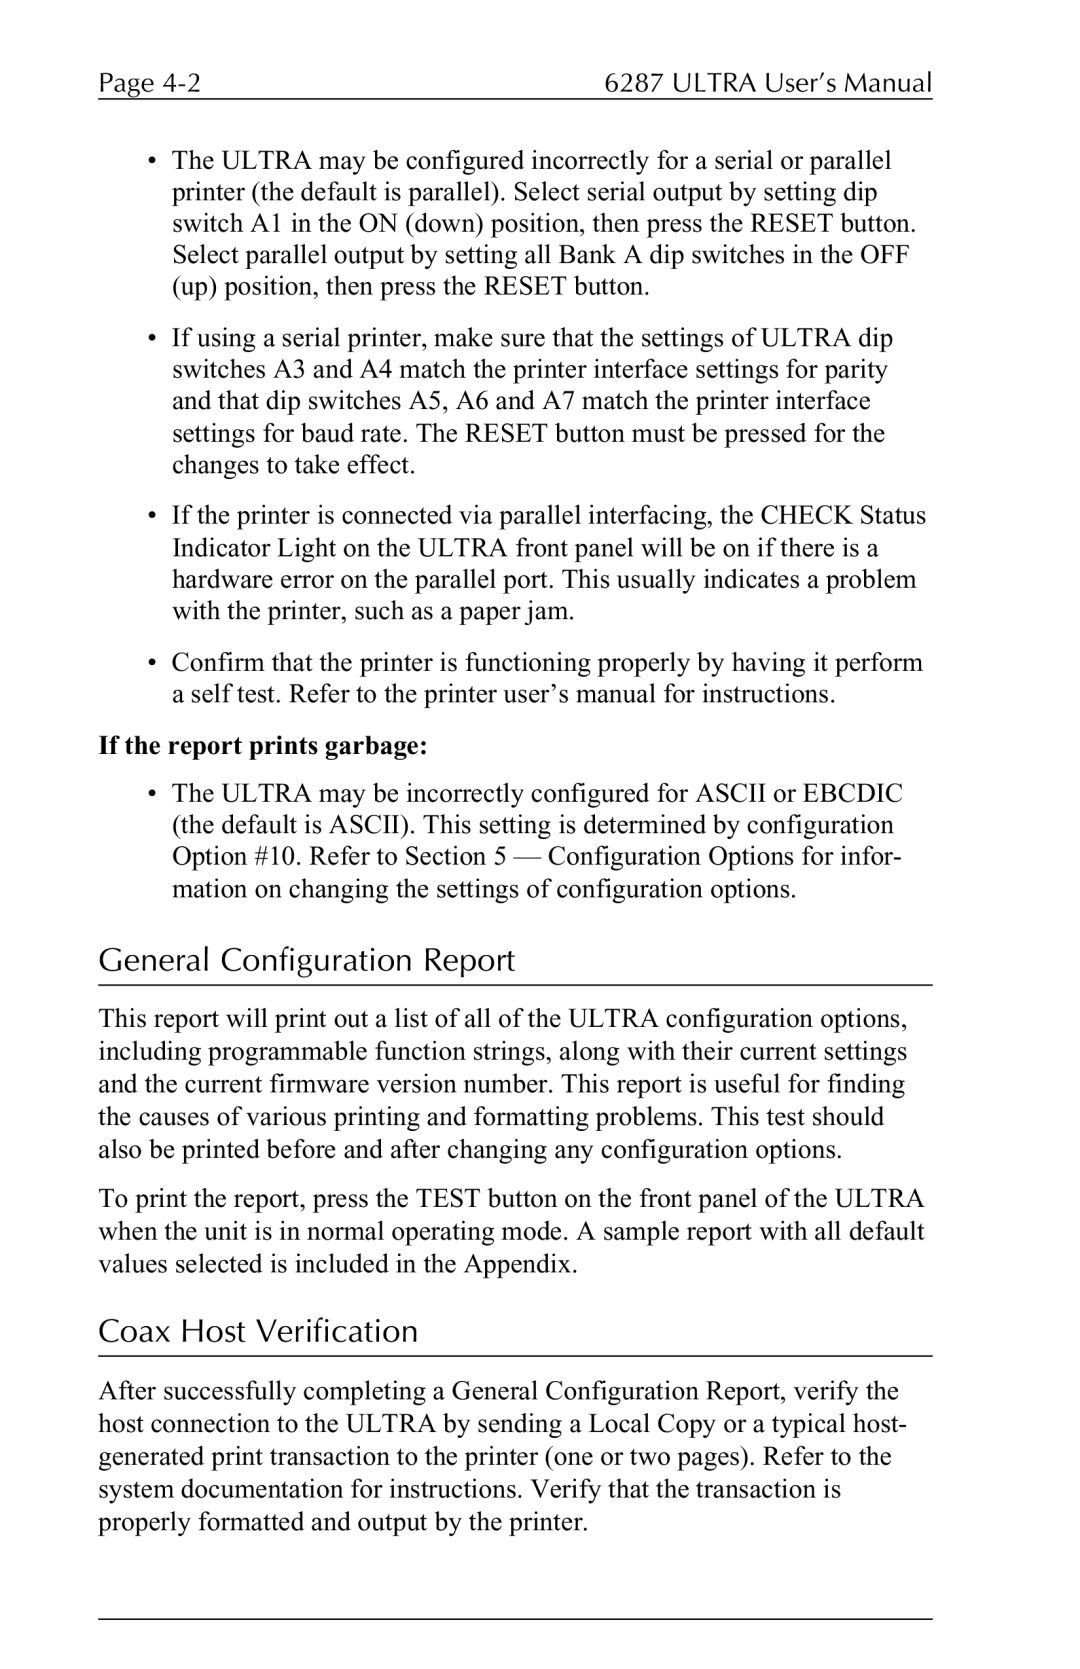 Agilent Technologies 6287 manual General Configuration Report, Coax Host Verification 